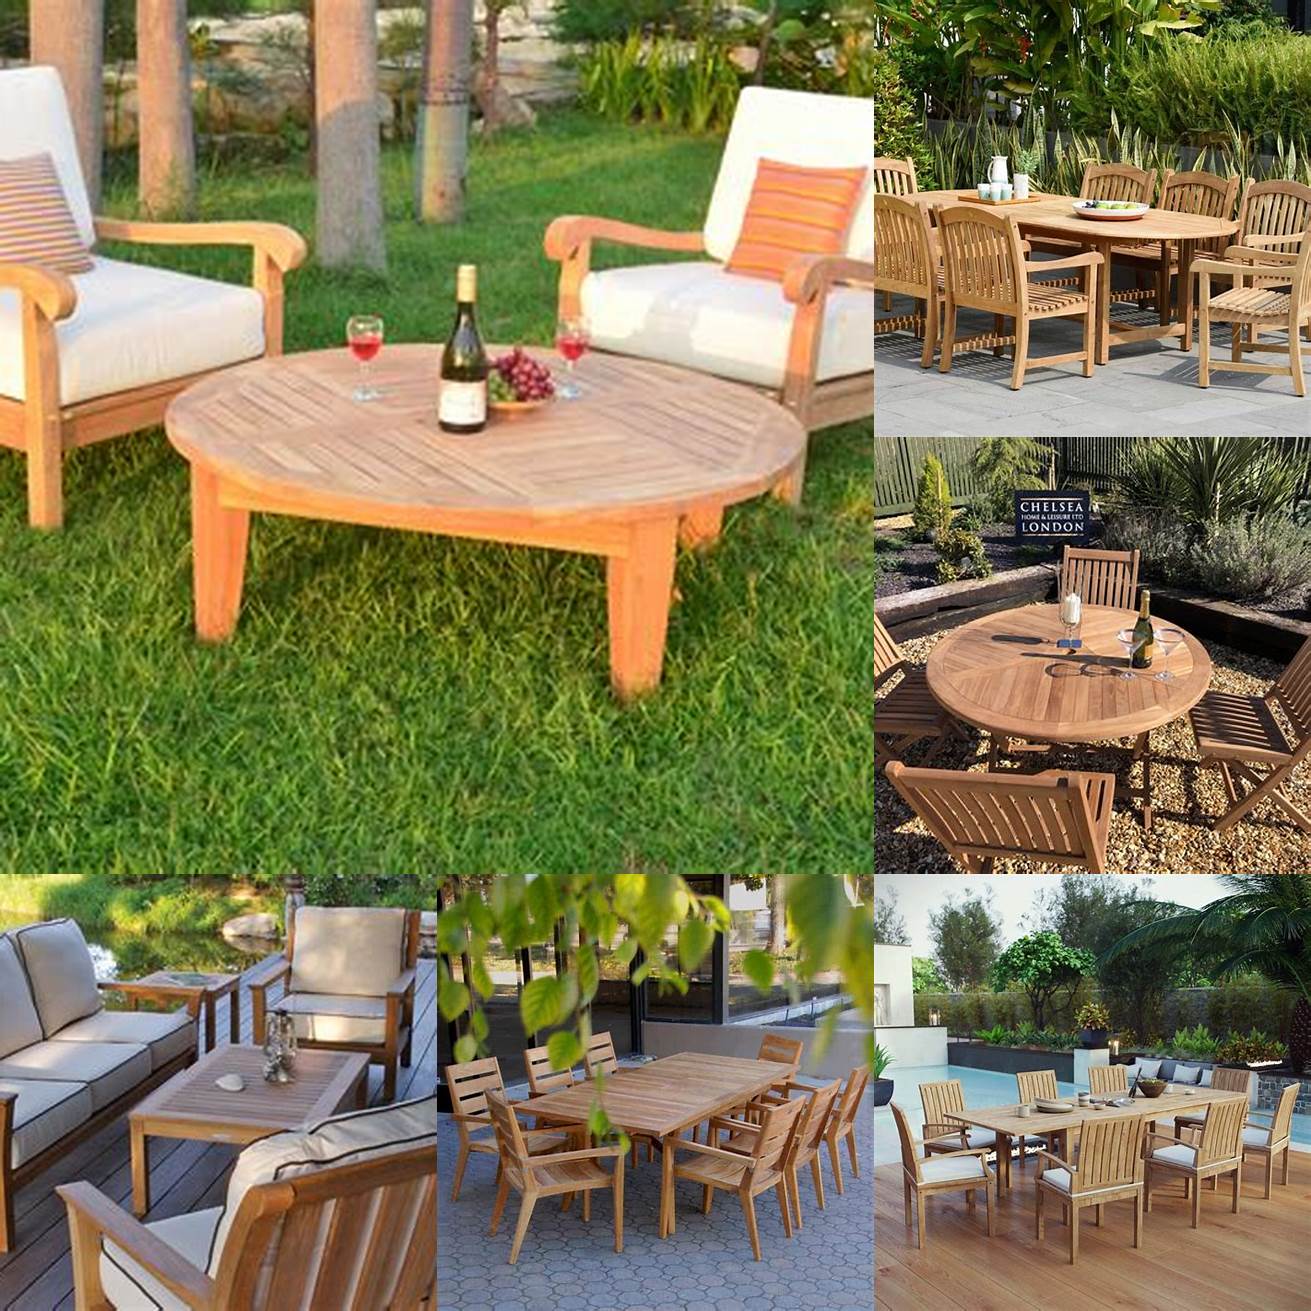 Teak outdoor furniture in direct sunlight